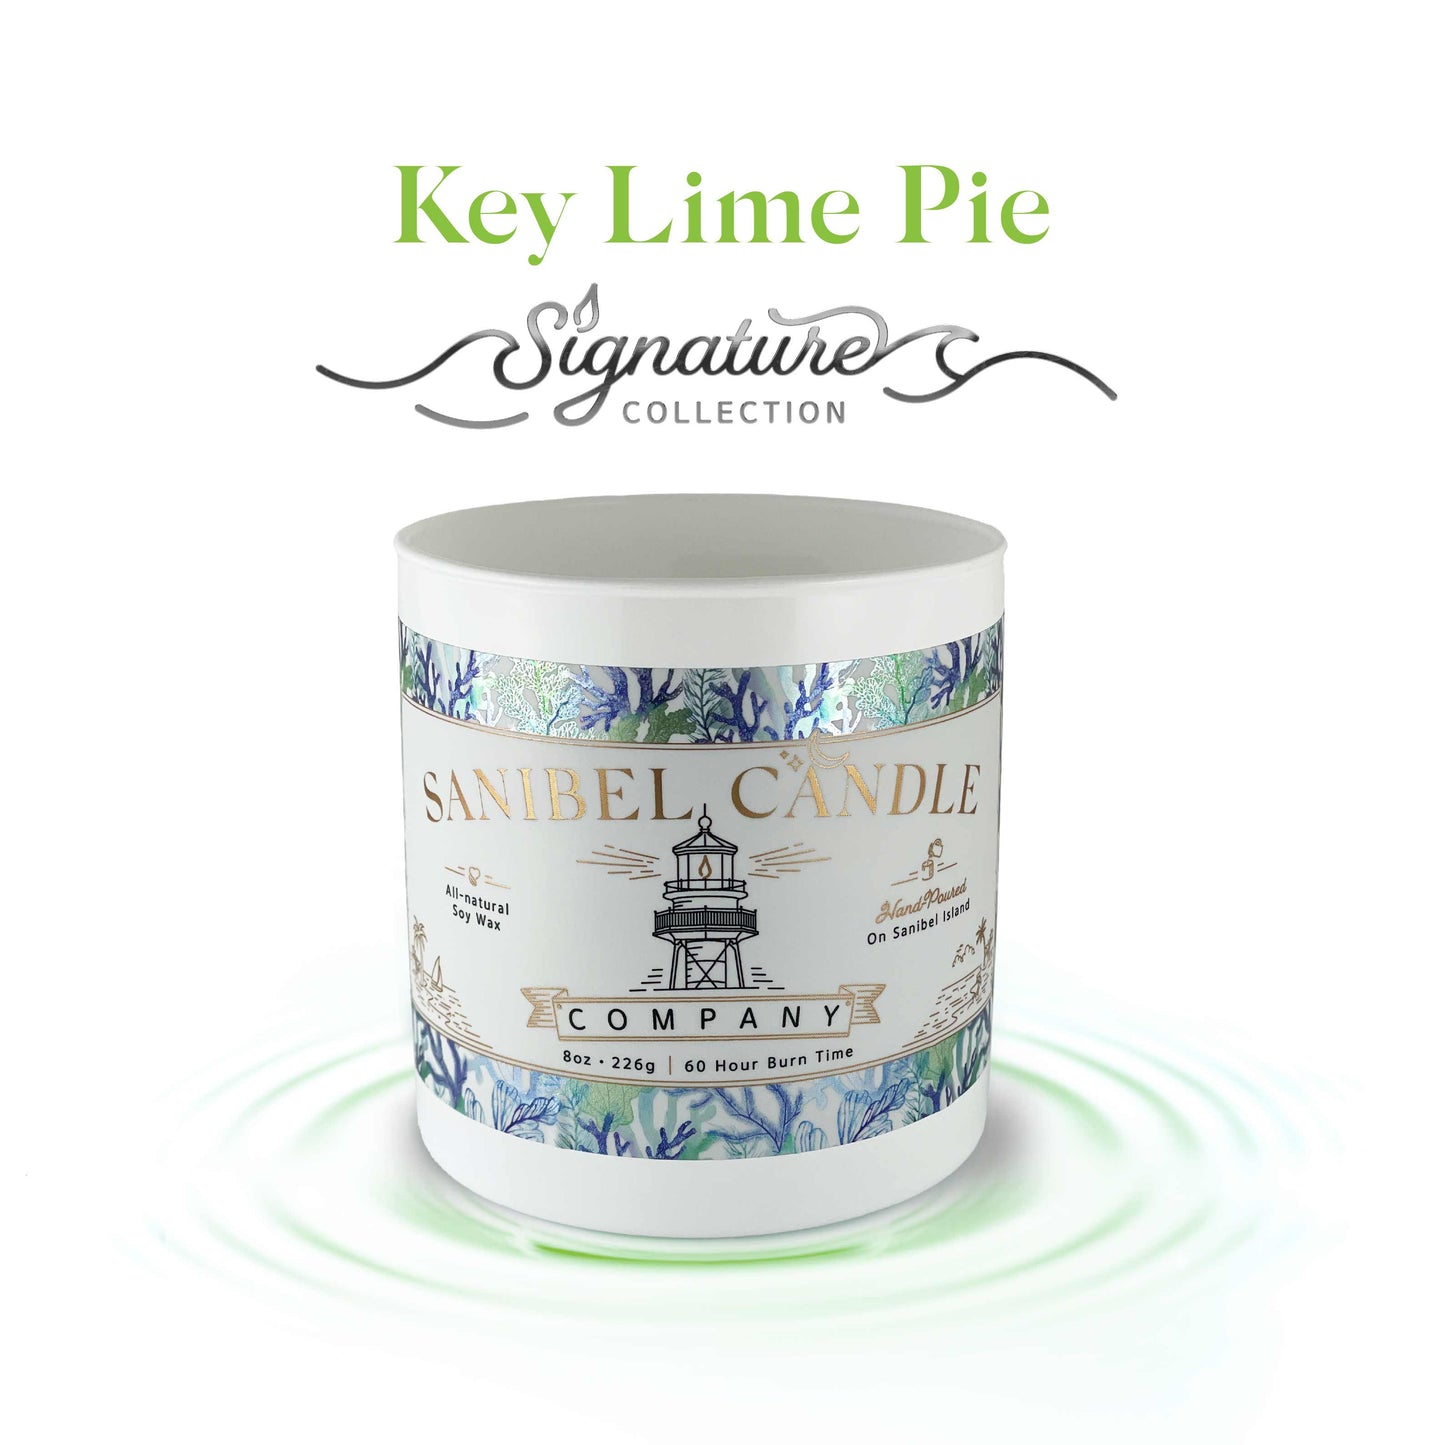 Key Lime Pie - Signature Candle - 8 oz